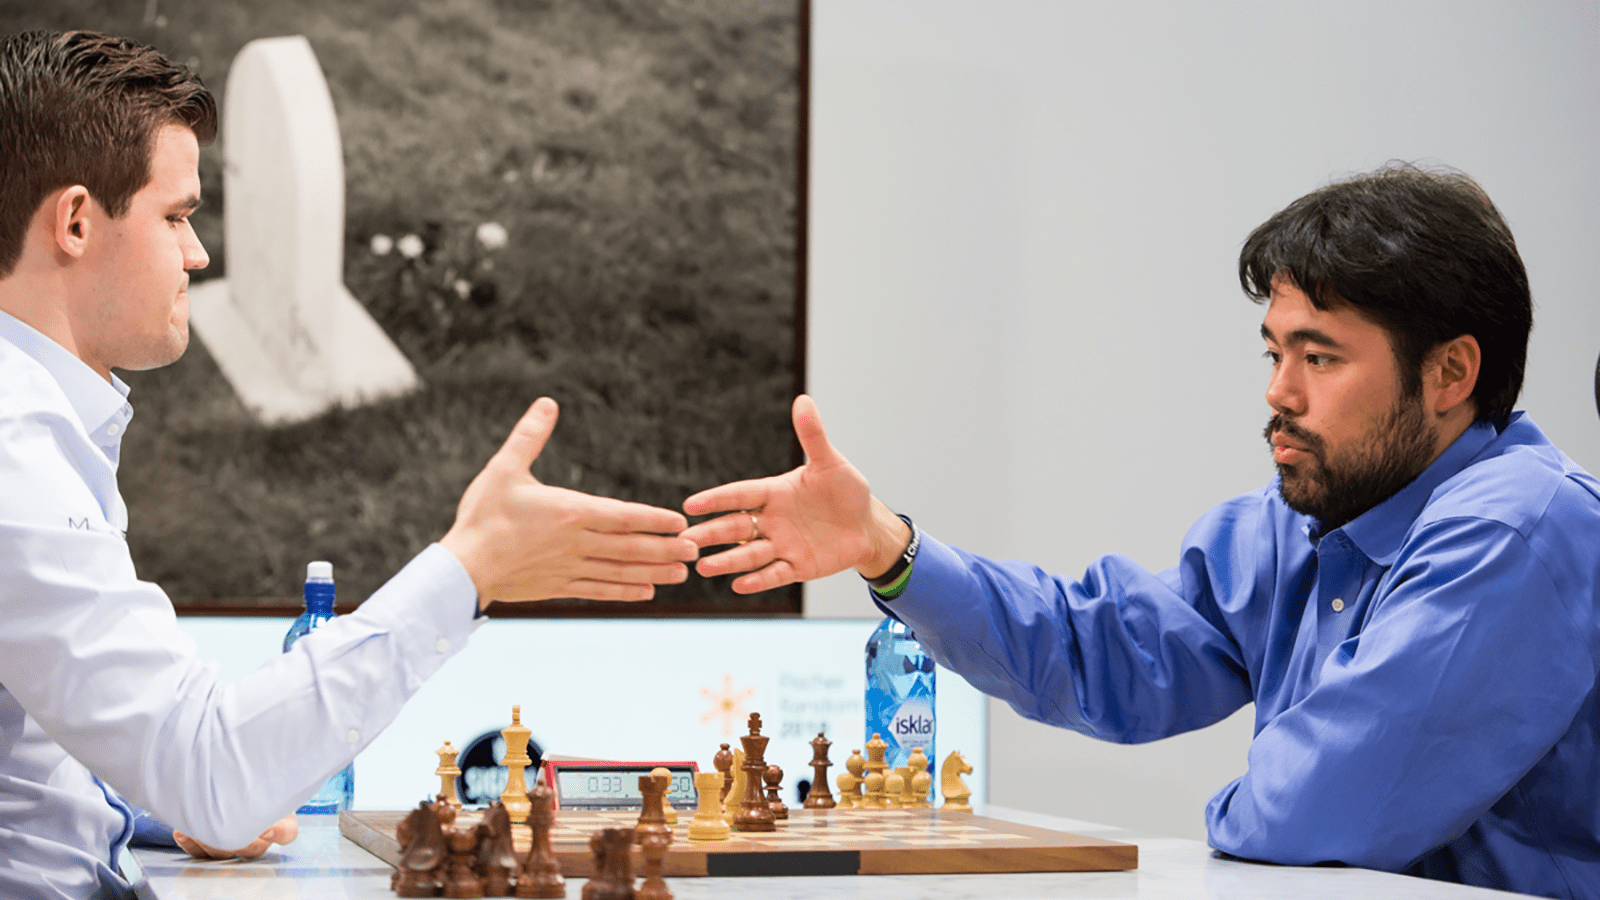 Magnus Carlsen About Why He HATES Garry Kasparov 